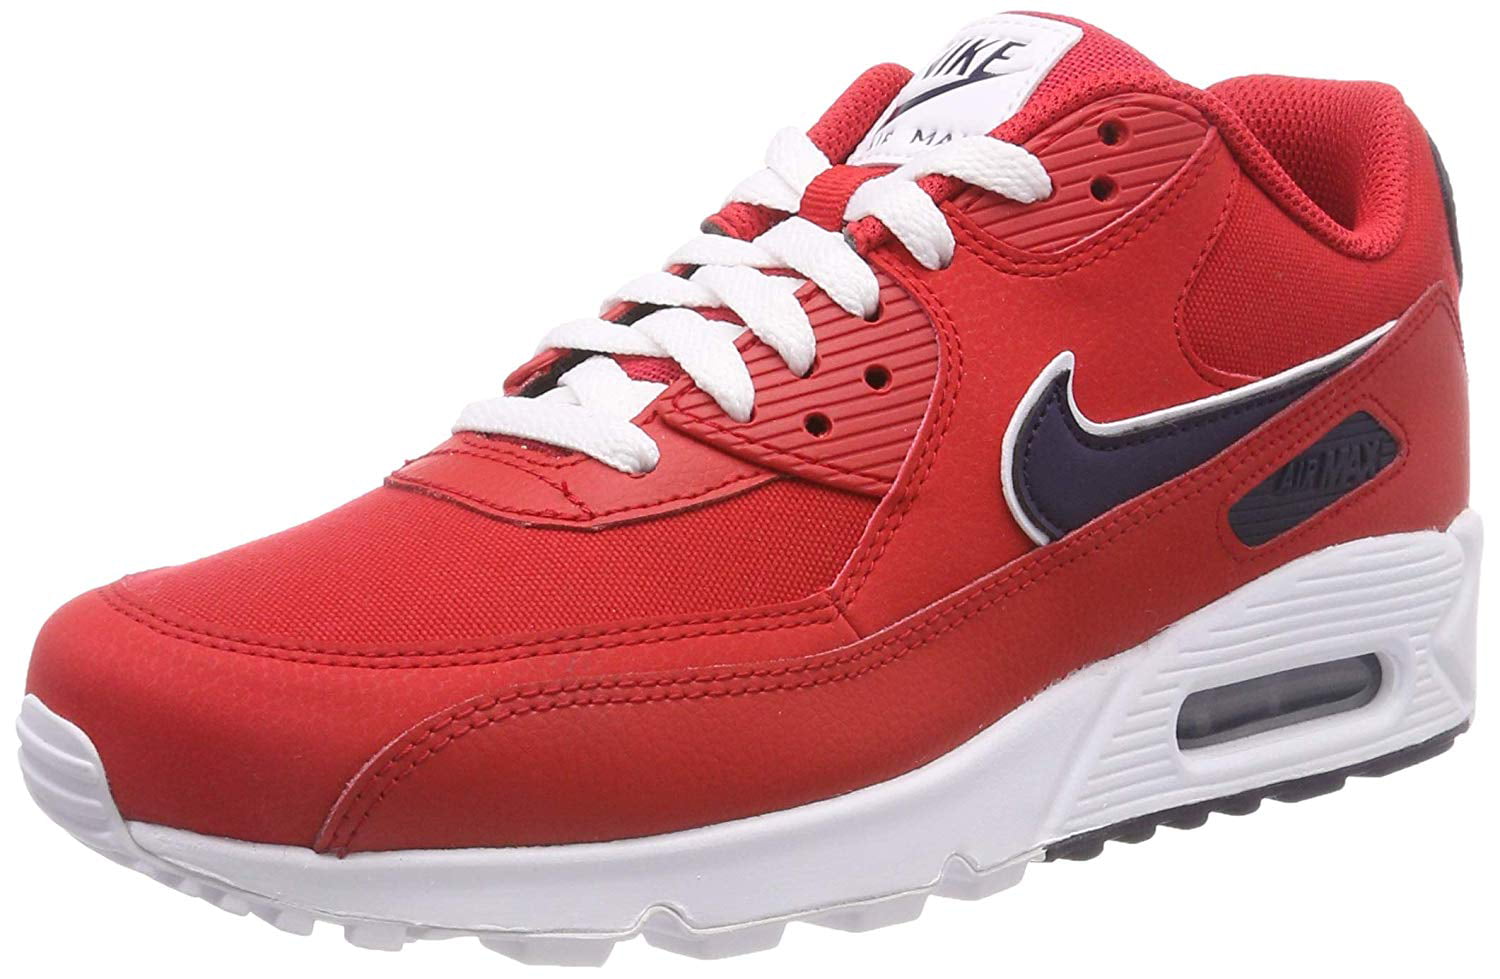 Nike AJ1285-601: Mens Air Max 90 Essential Gym Red/White Sneakers (10.5 D(M) US Men)